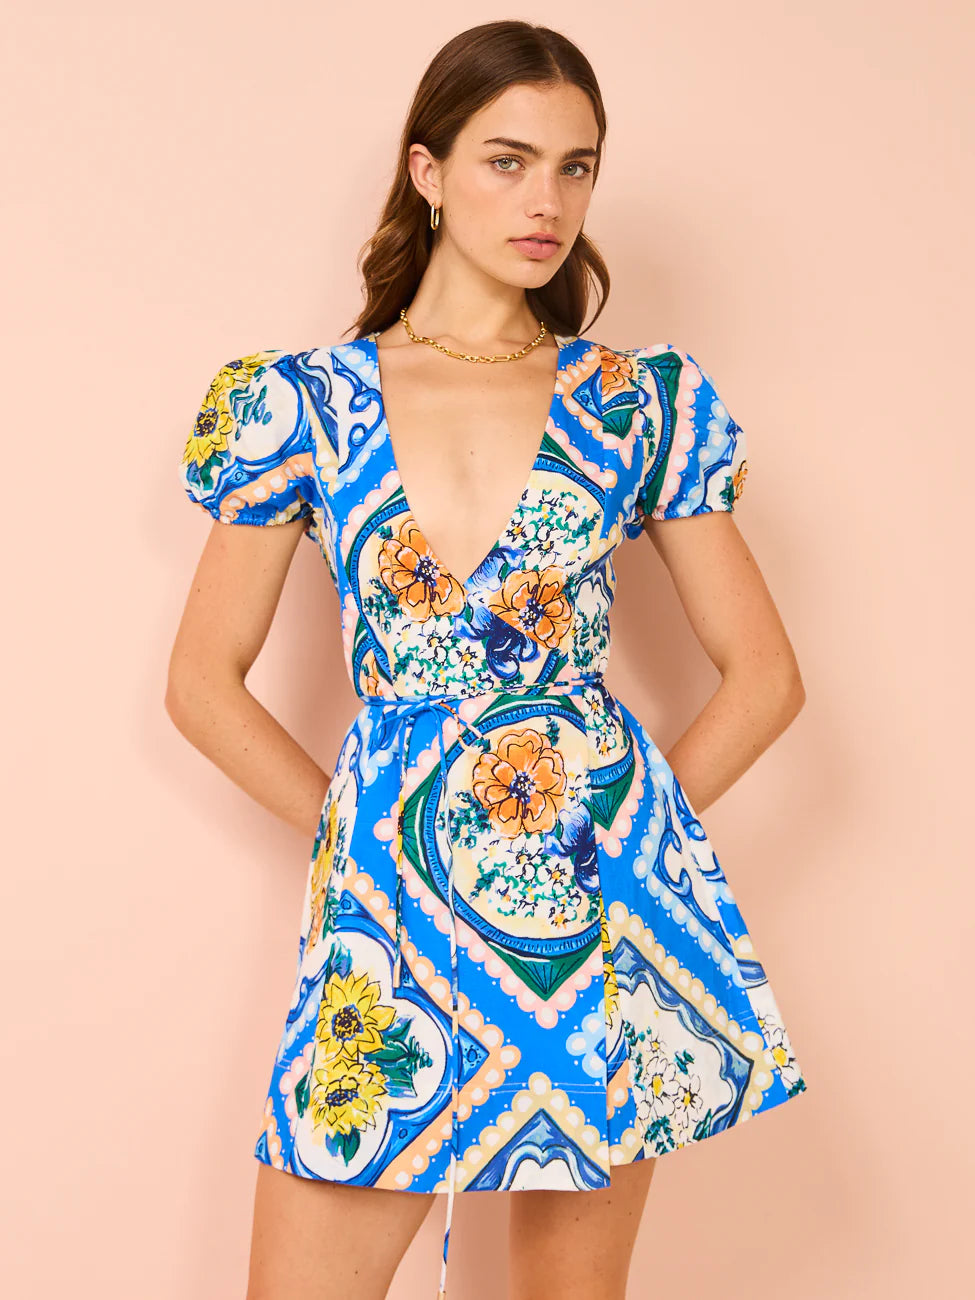 Hire BY NICOLA Havana Wrap Mini Dress in Azure Floral